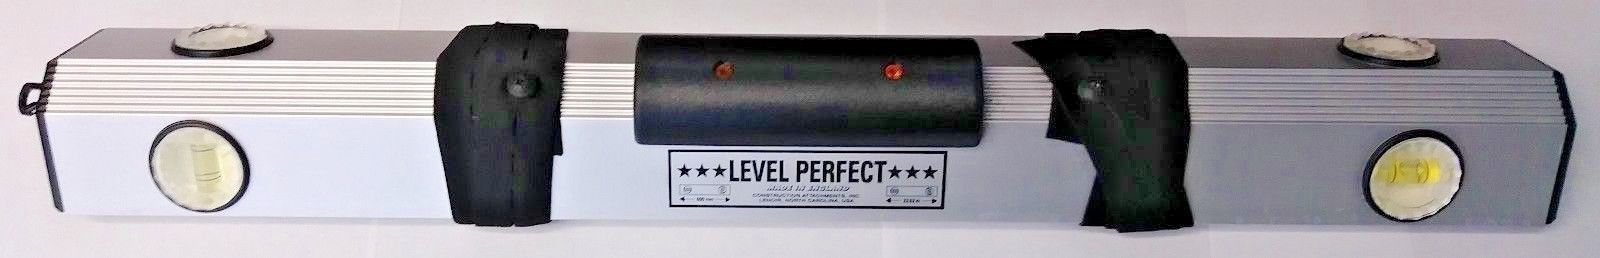 Level Perfect 24"  Aluminum Angle Level 4 Vials 02330 England